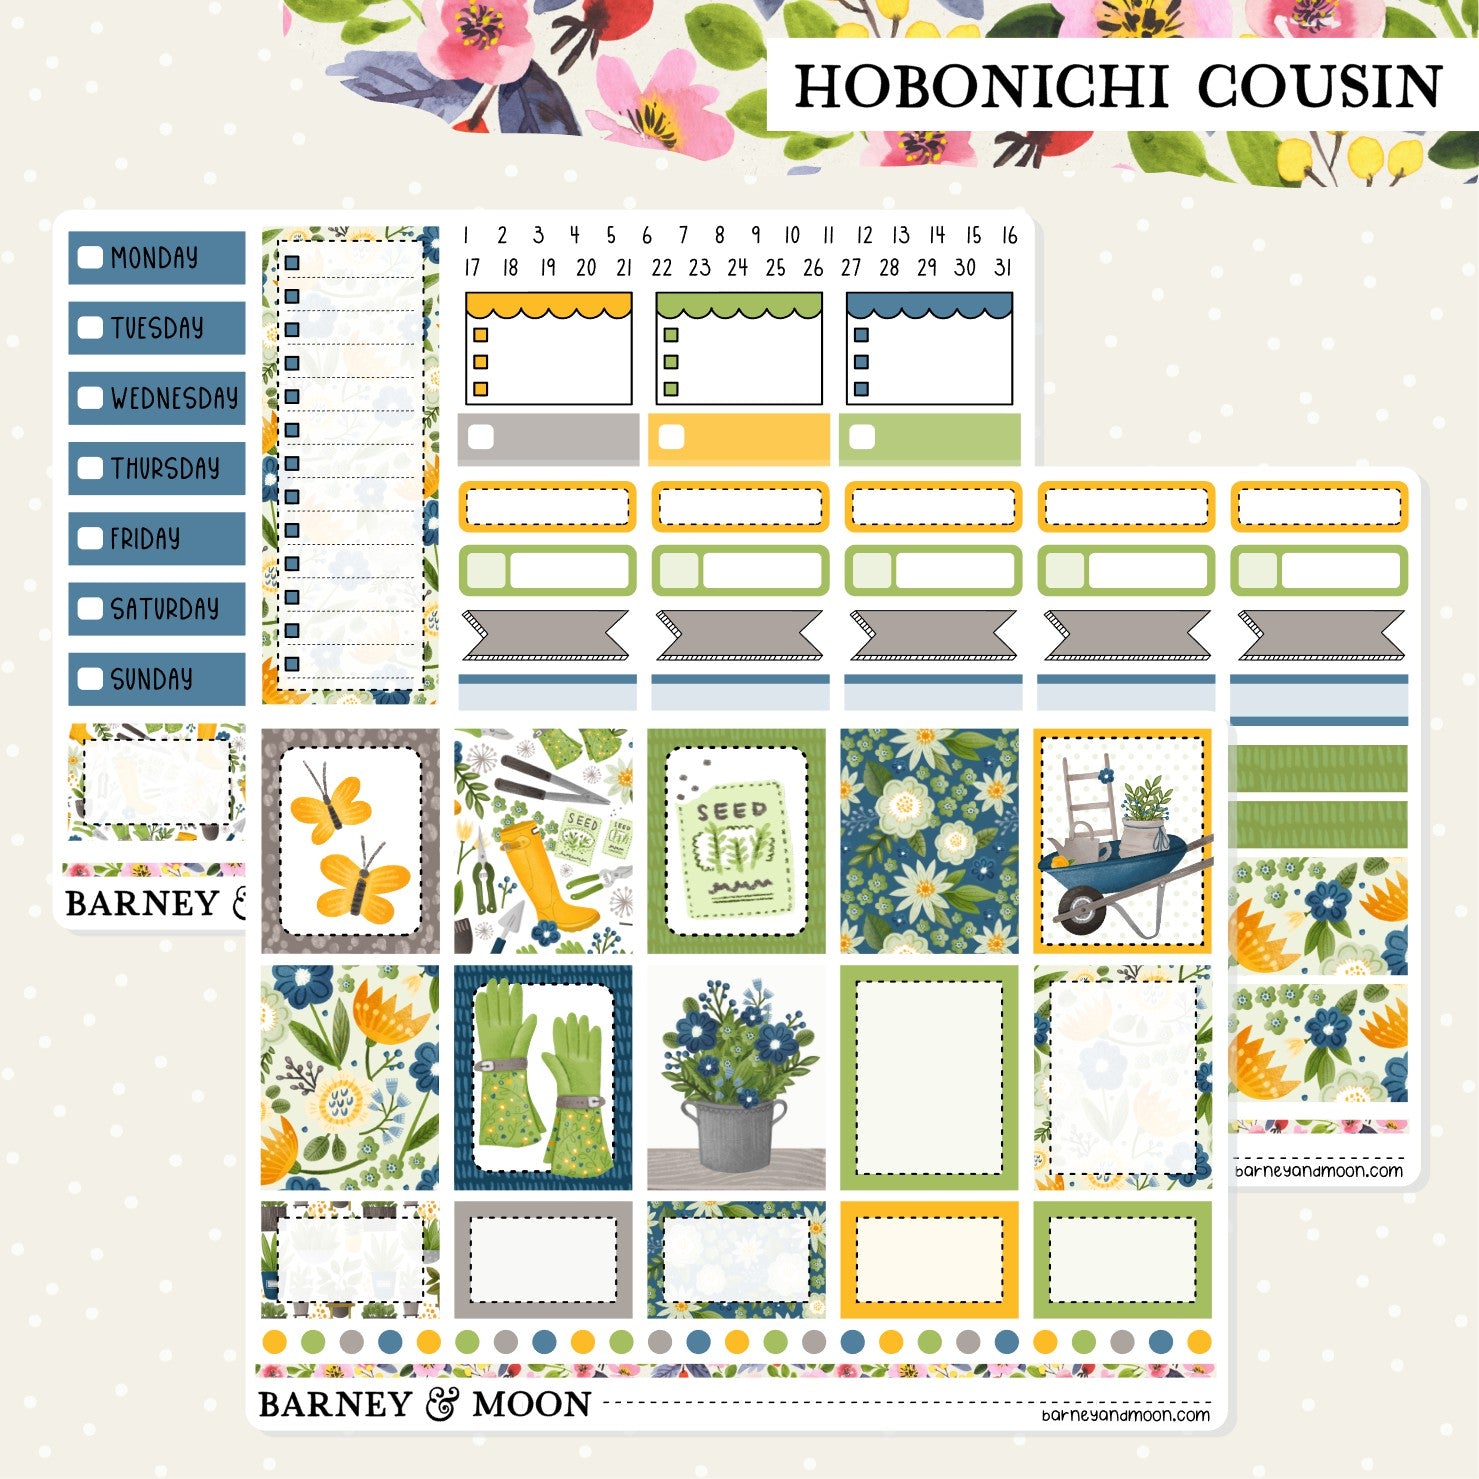 Hobonichi Cousin Planner Stickers